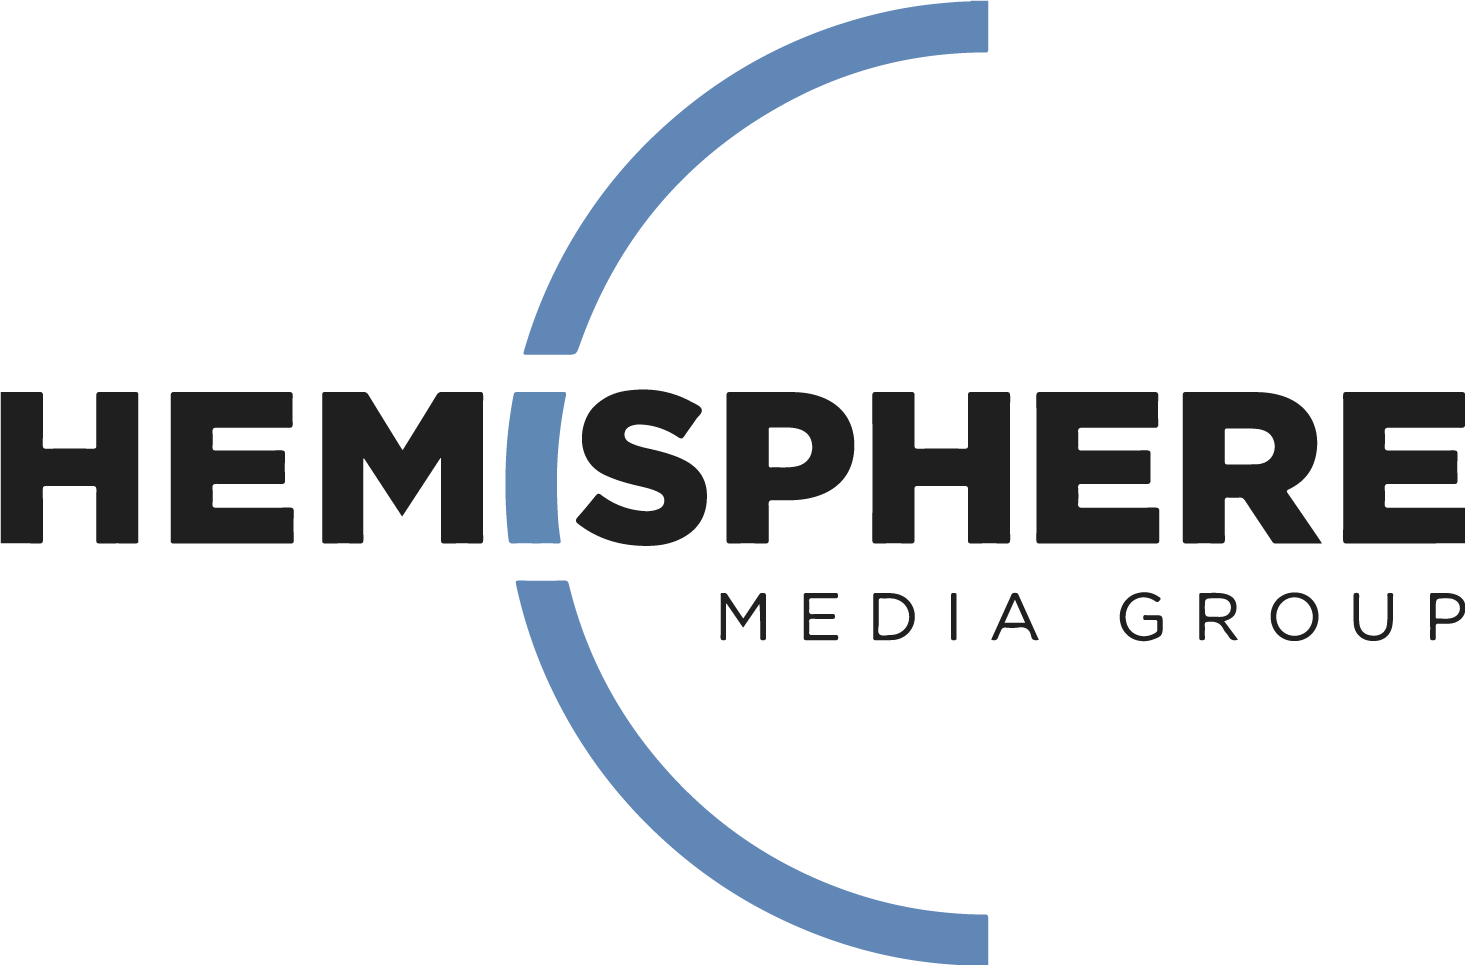 Hemisphere Media Group logo large (transparent PNG)